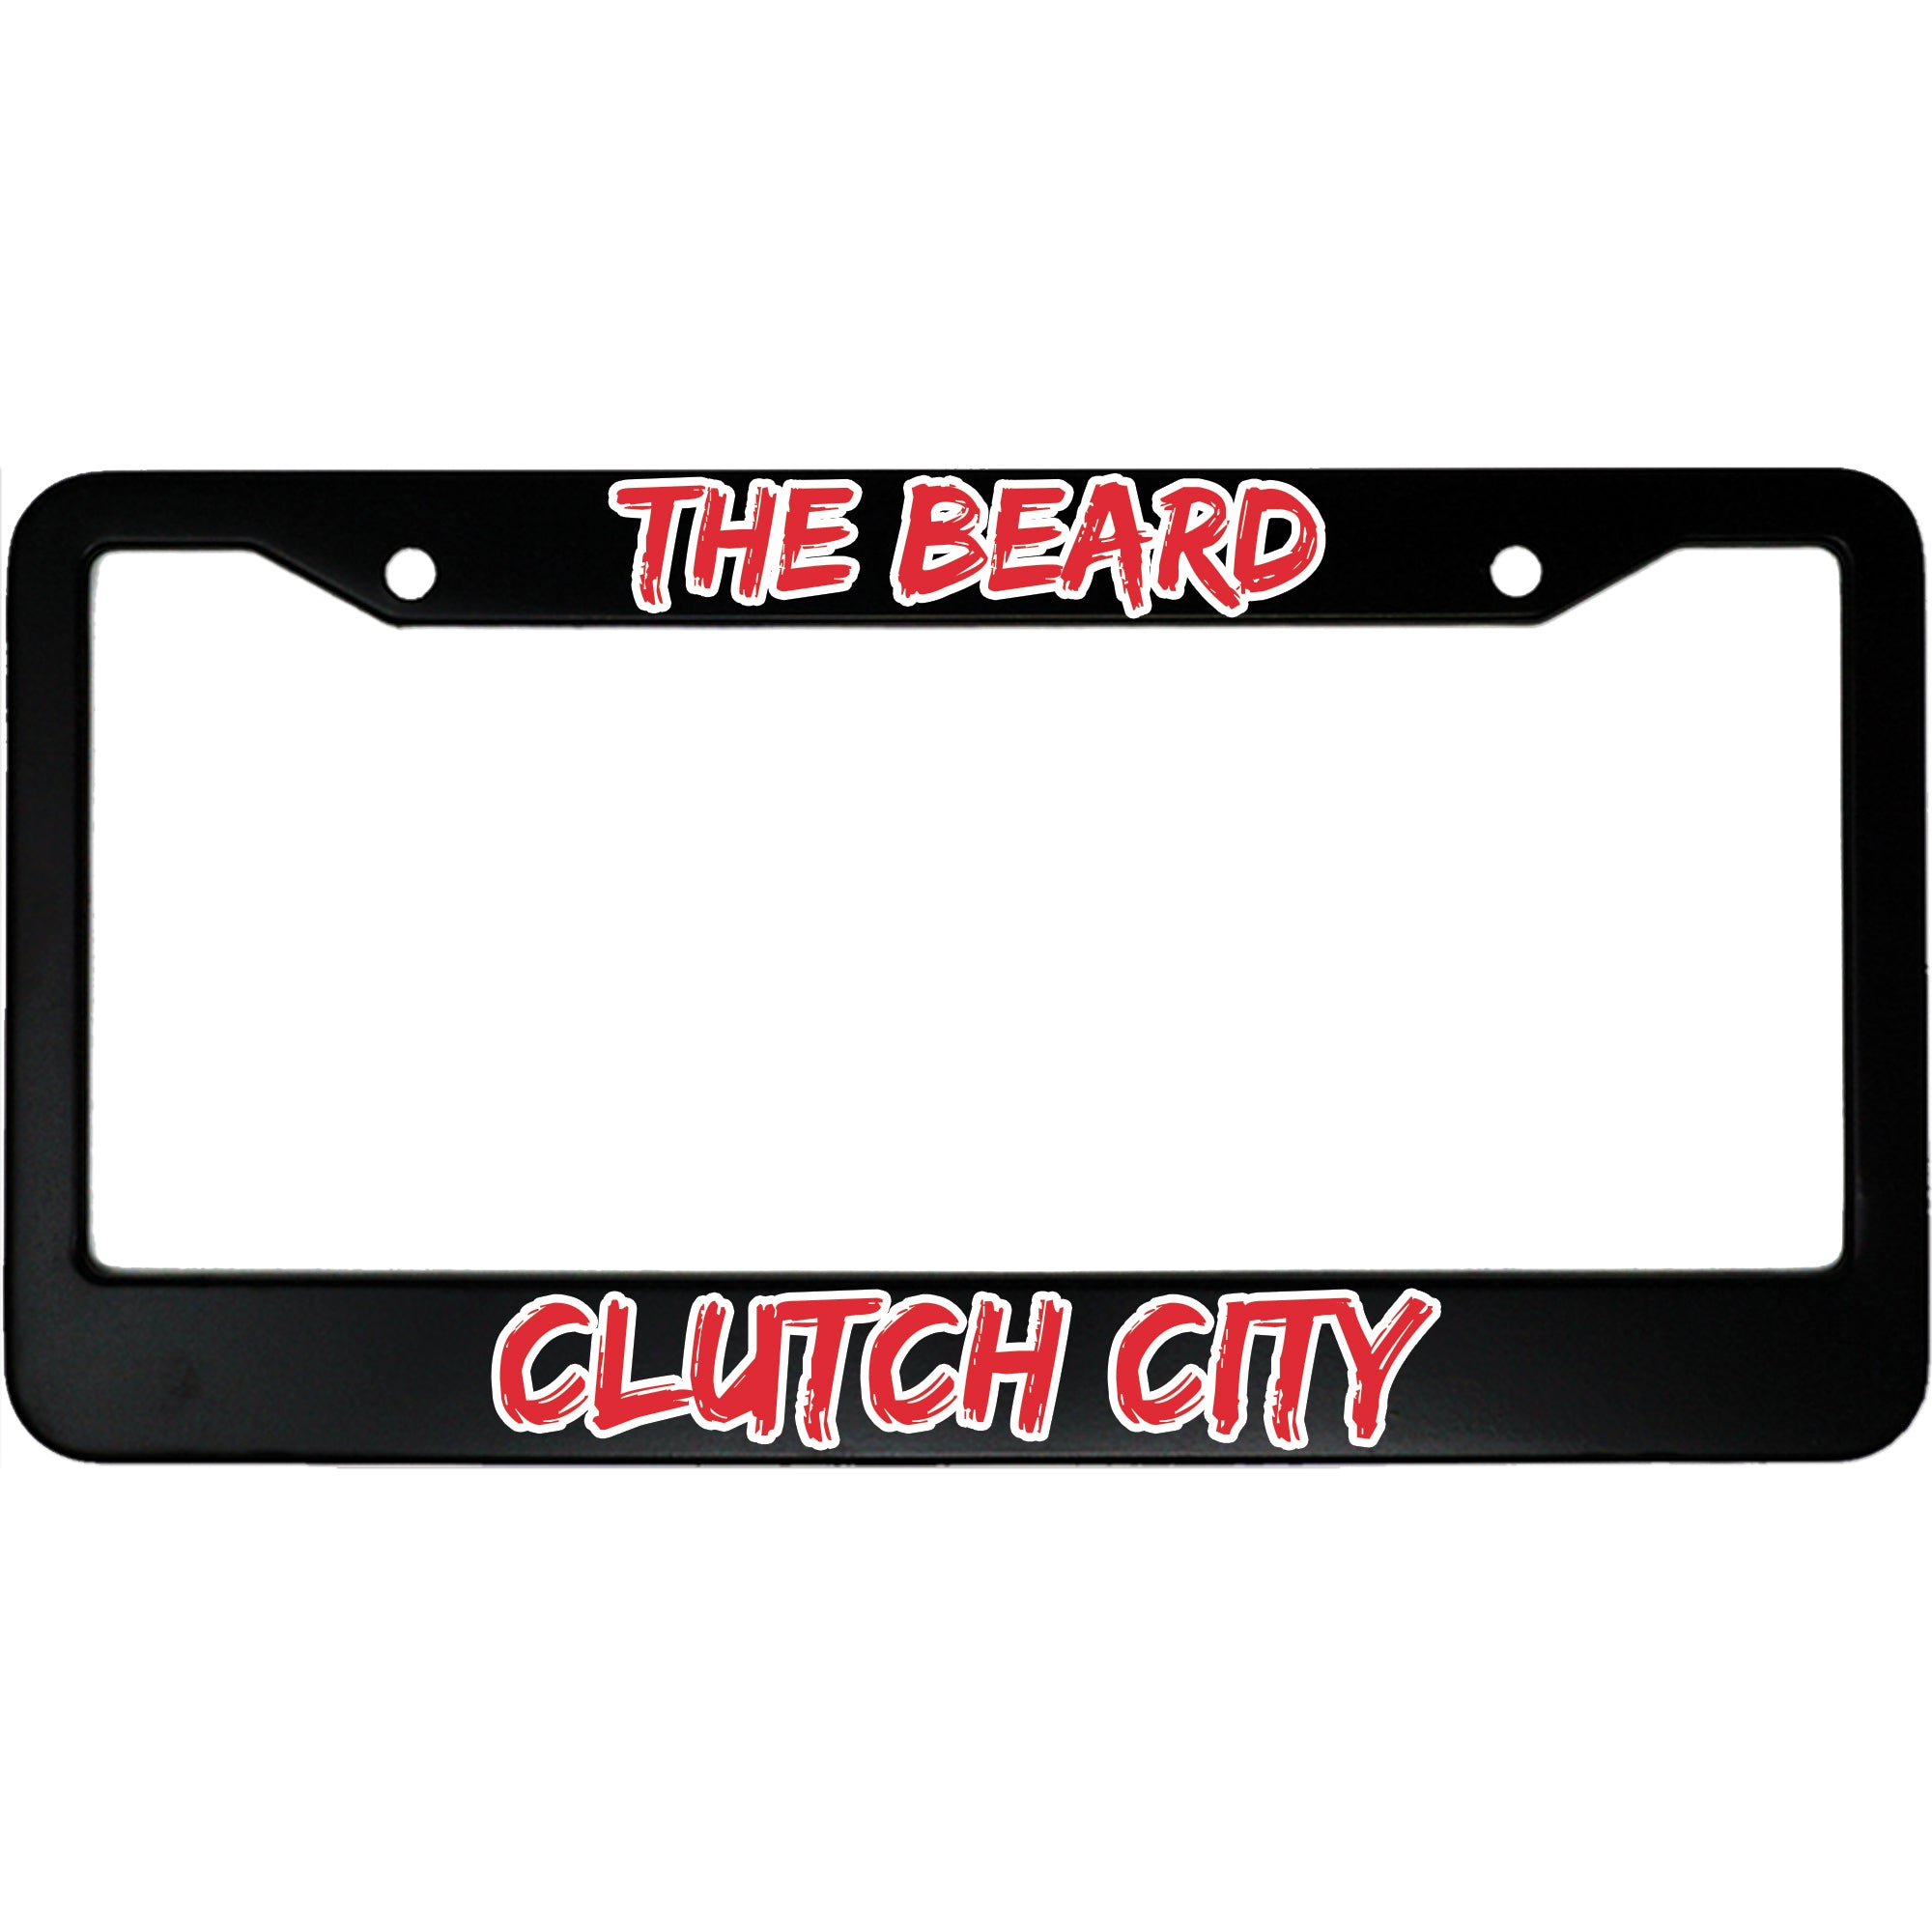 The Beard Clutch City